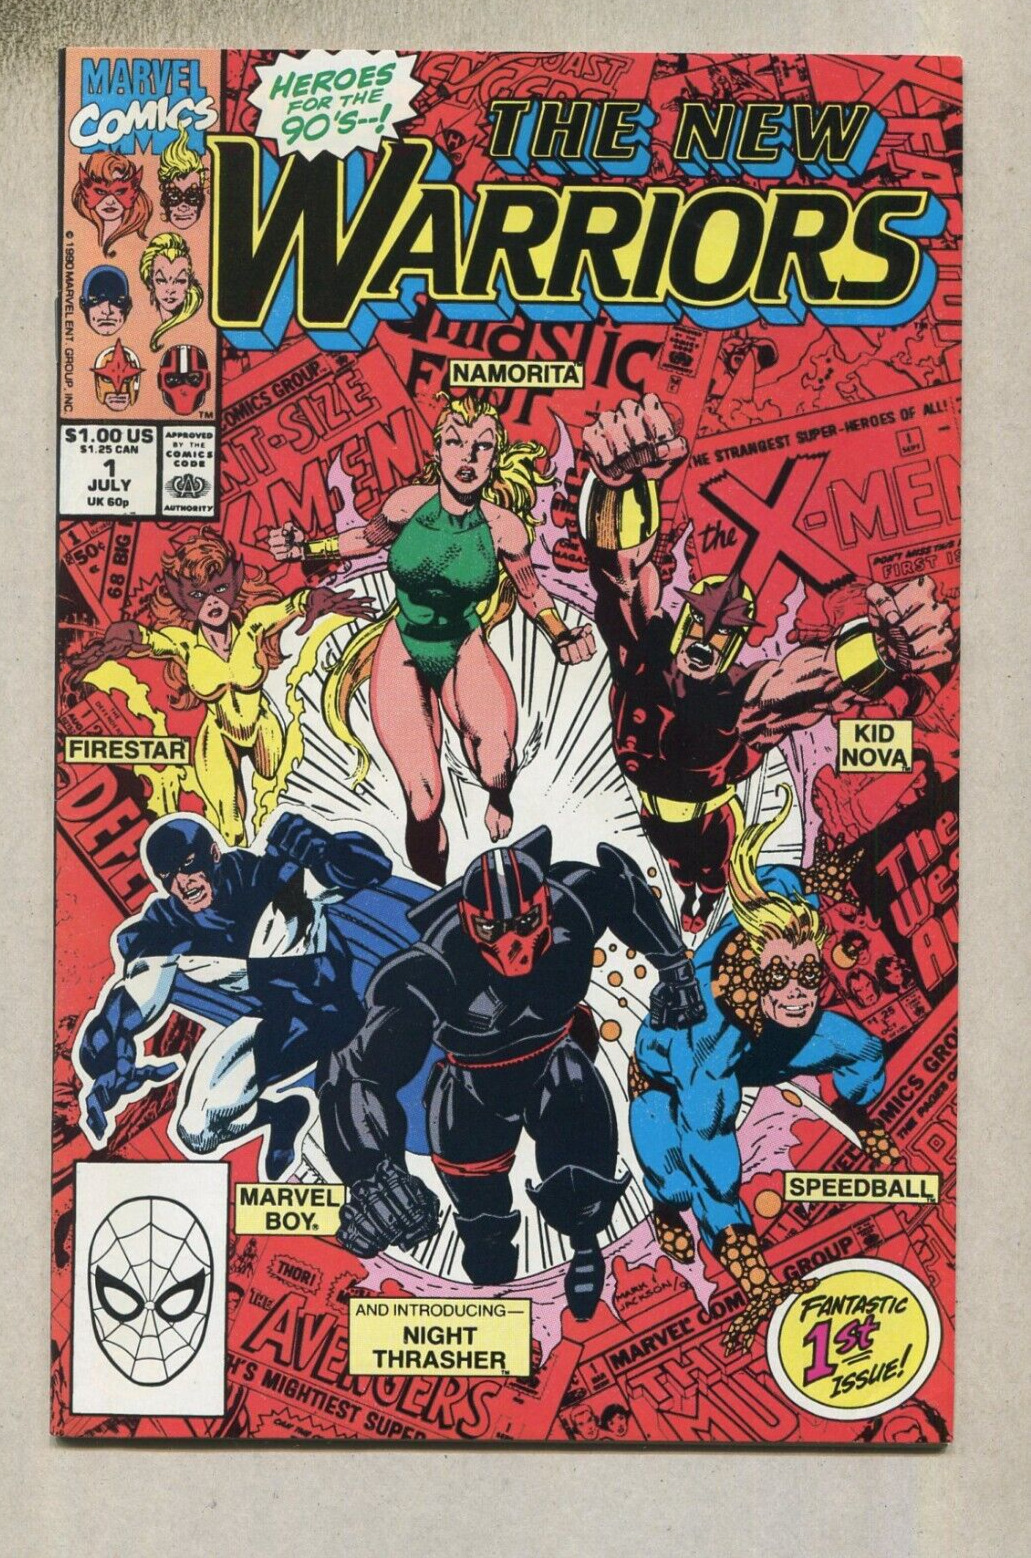 The New Warriors # 1 NM Introducing: Night Thrasher  Marvel  Comics    D2